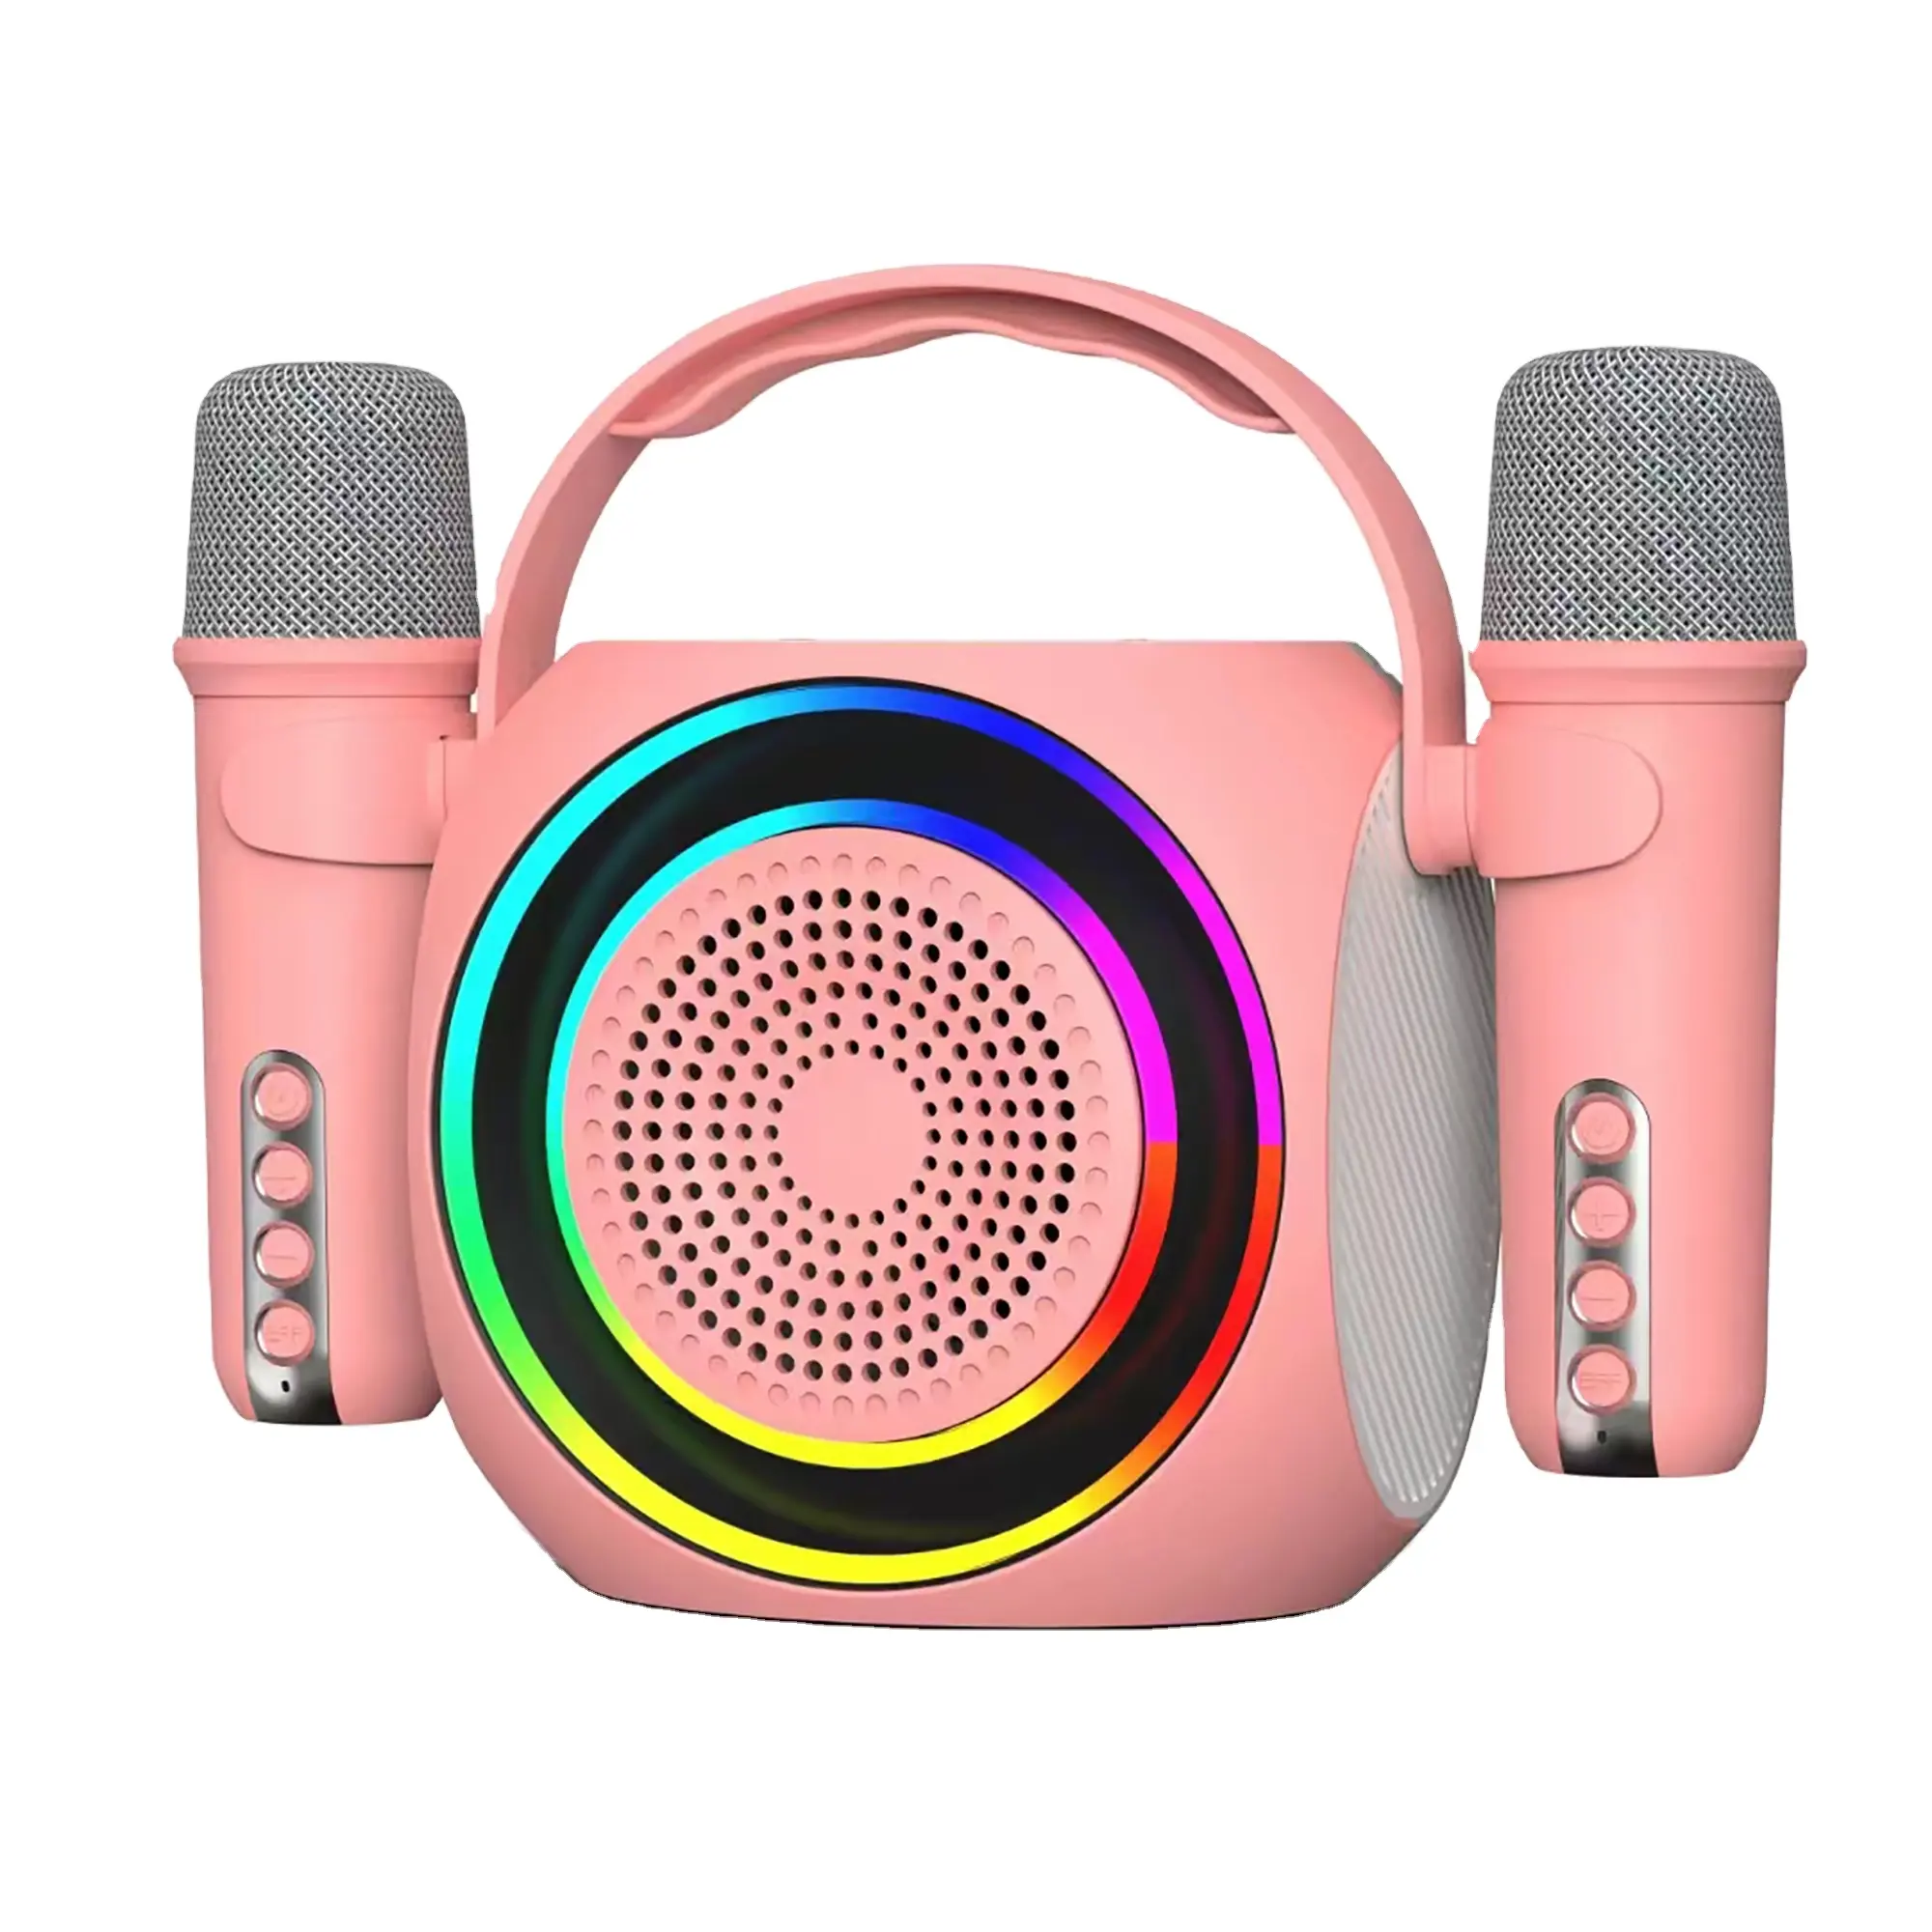 Sistem Karaoke Bluetooth Mini portabel lampu LED RGB 5W pengeras suara mikrofon USB Aux Audio baterai suara Audio rumah